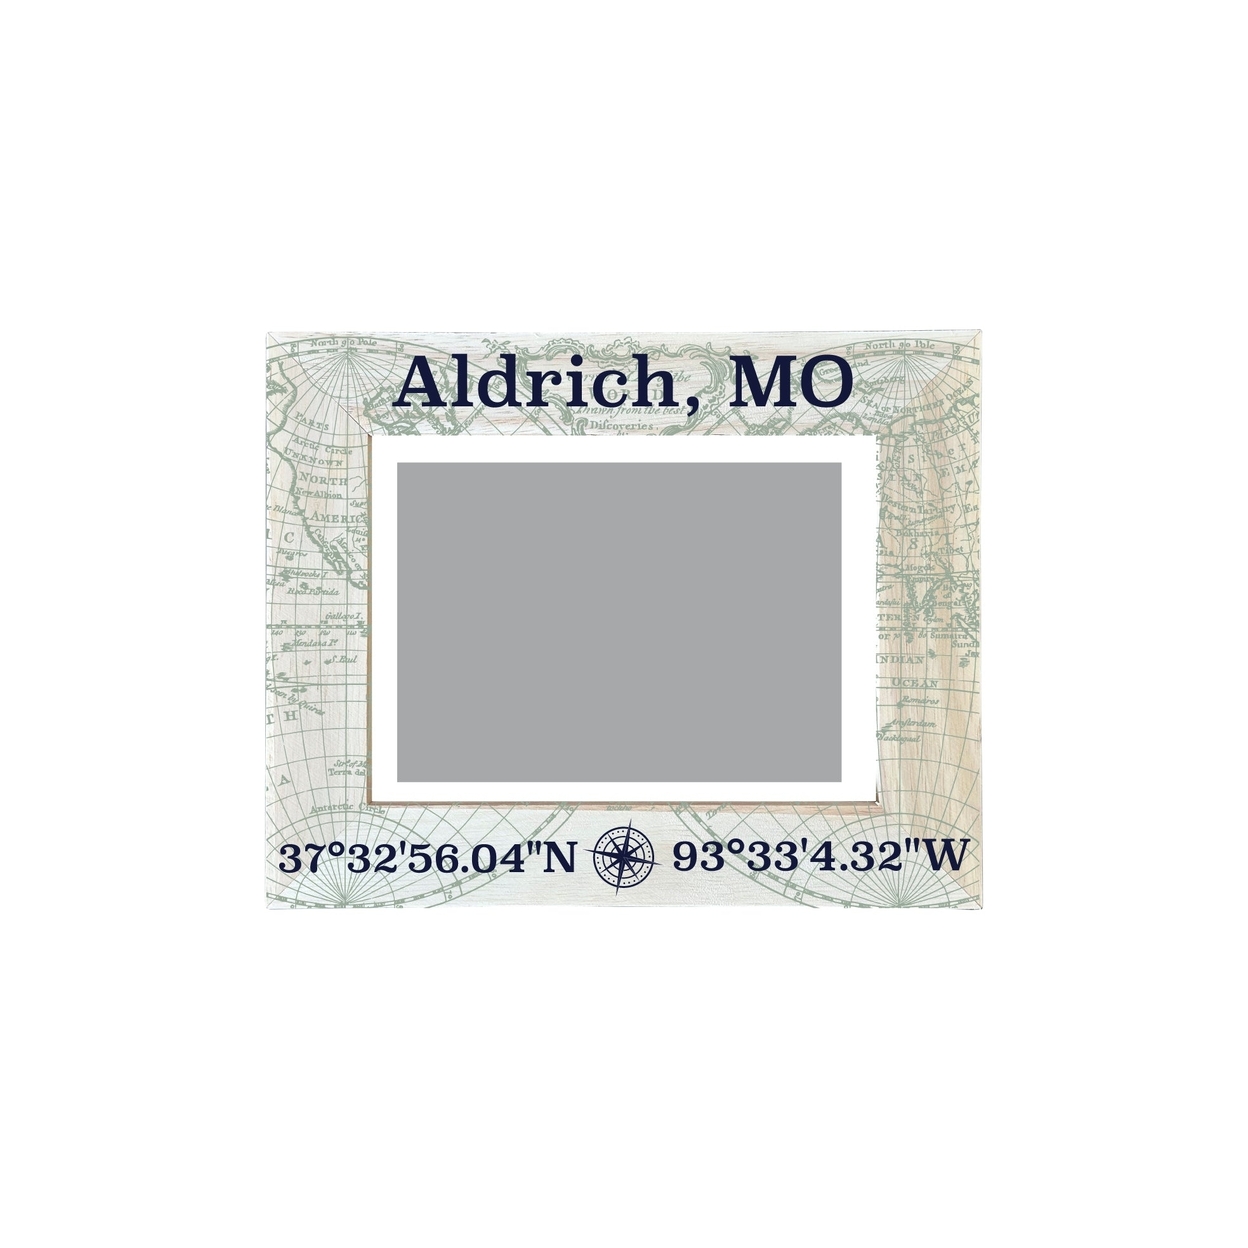 Aldrich Missouri Souvenir Wooden Photo Frame Compass Coordinates Design Matted To 4 X 6